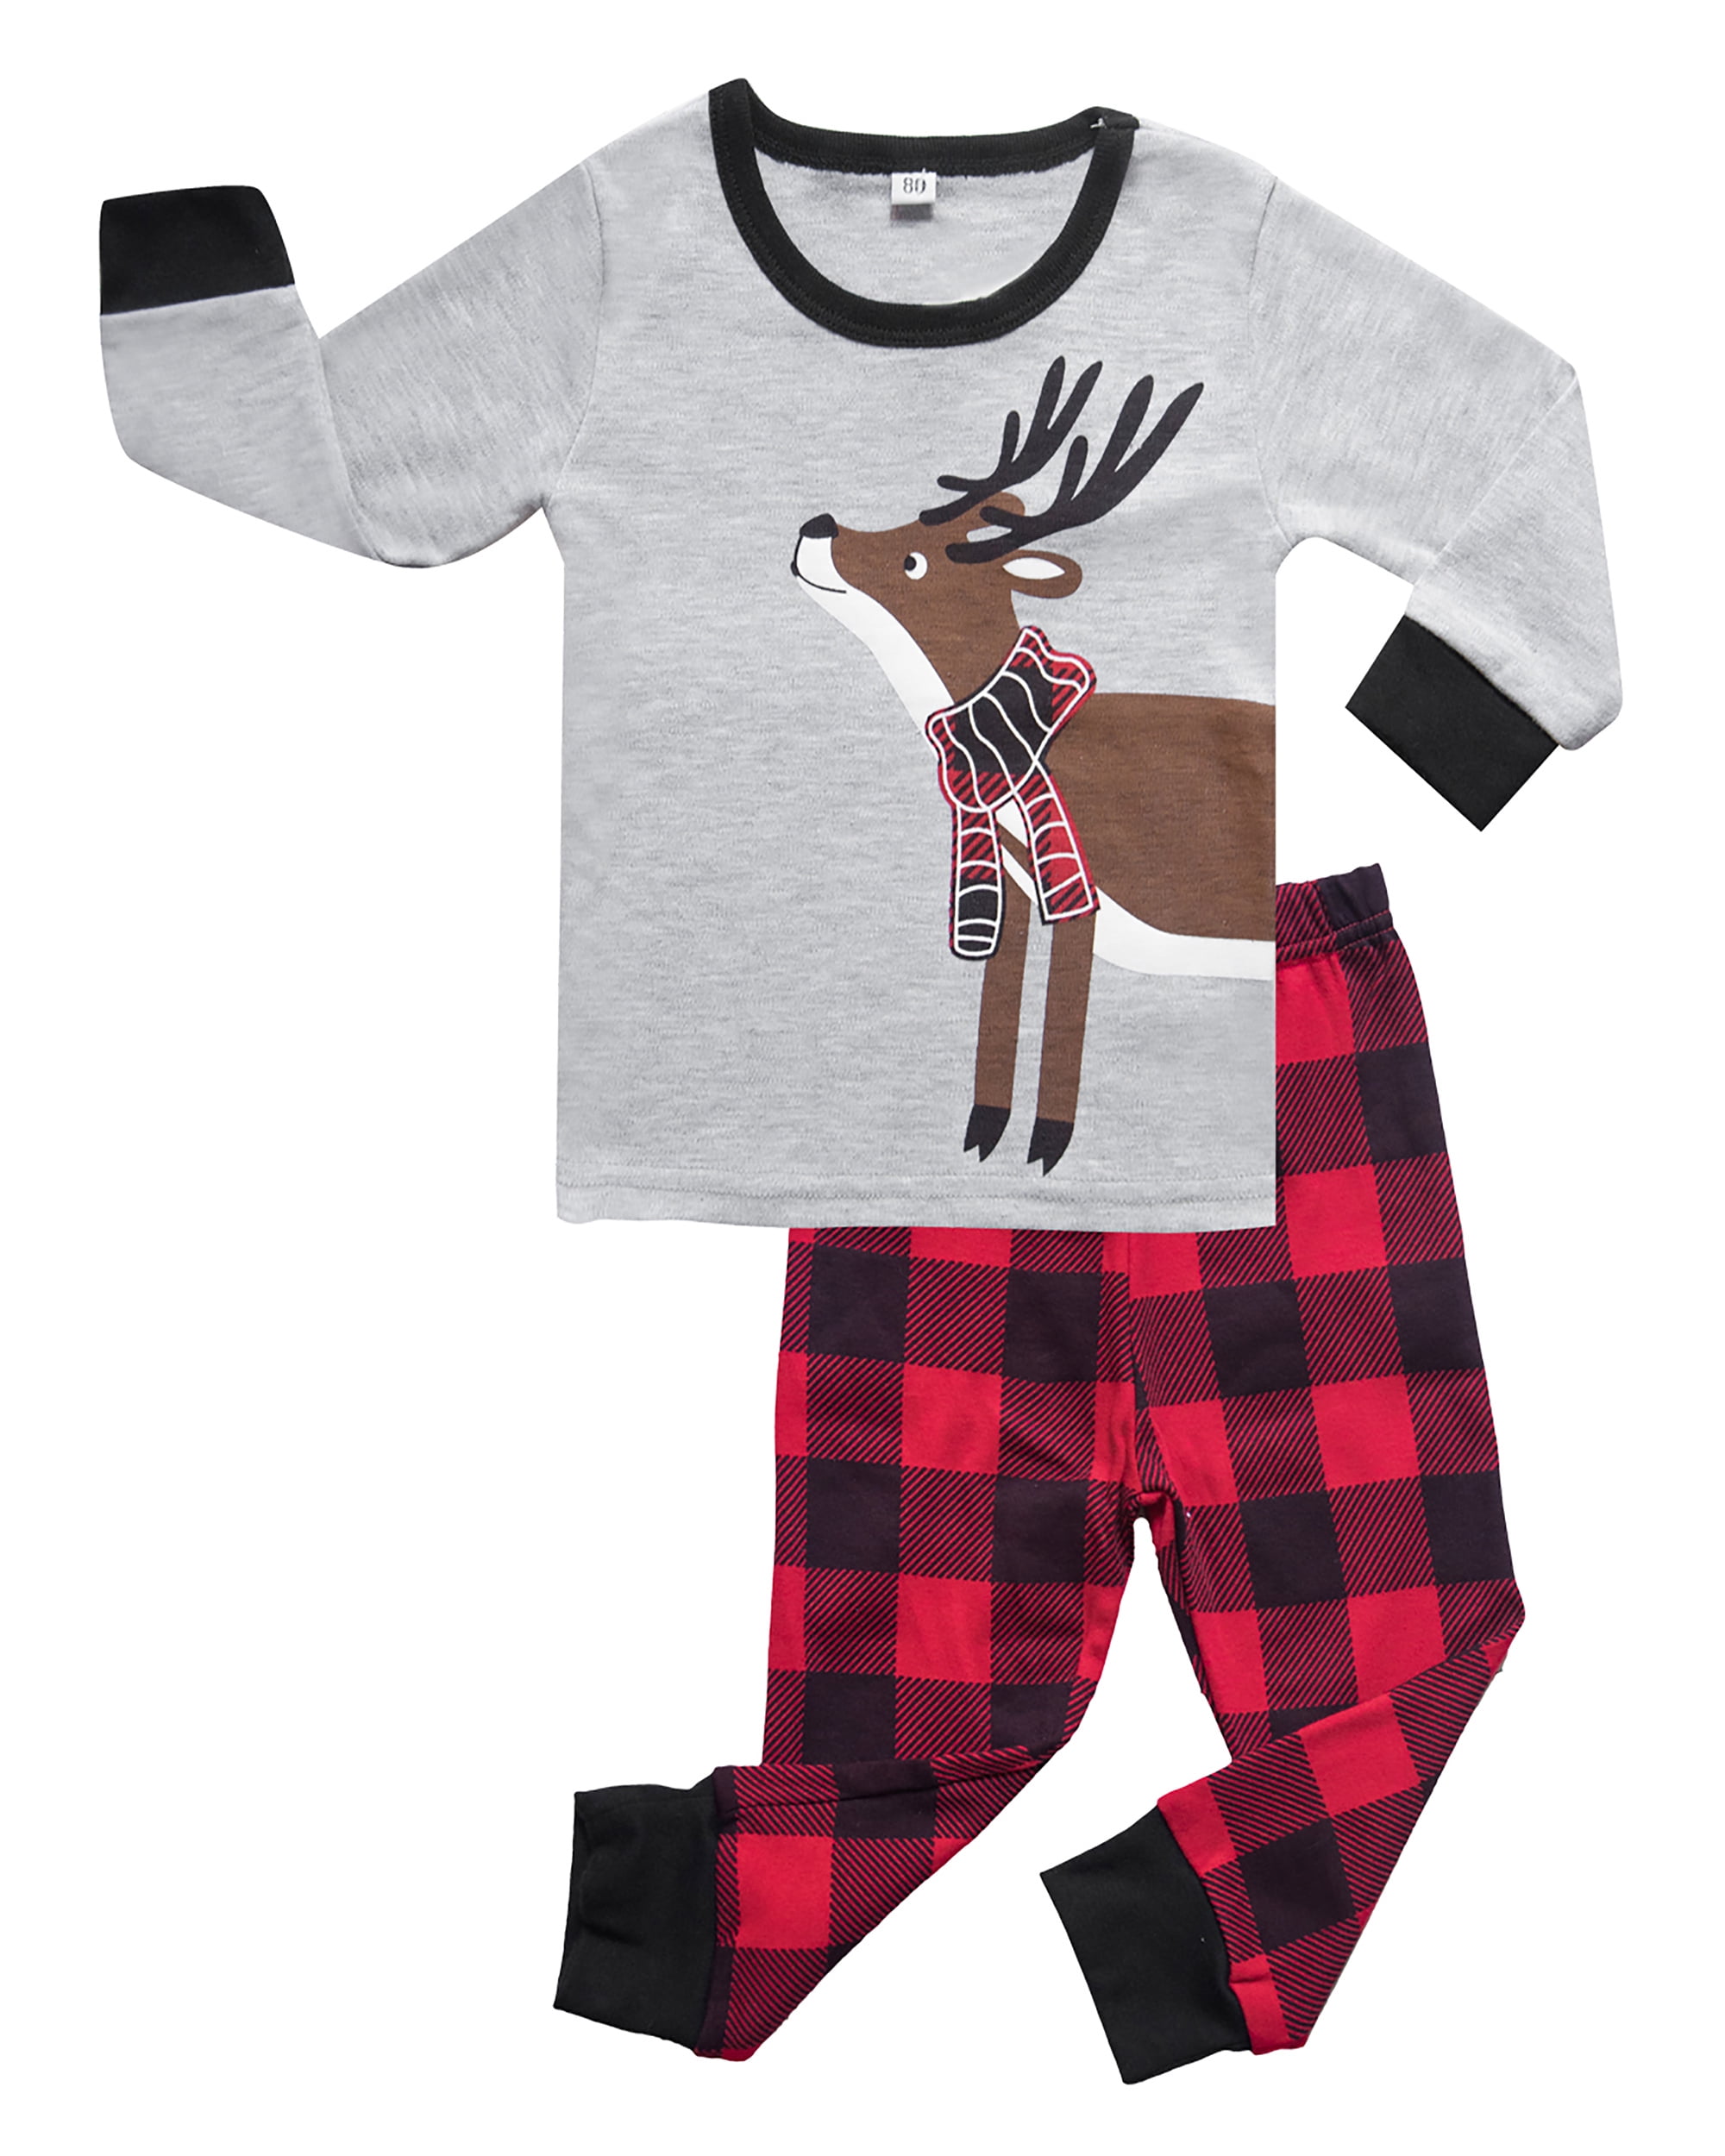 Little Boys Girls Christmas Pajamas Sets Reindeer Santa Claus 100% Cotton 2 Piece Toddler Clothes Kids Pjs Sleepwear